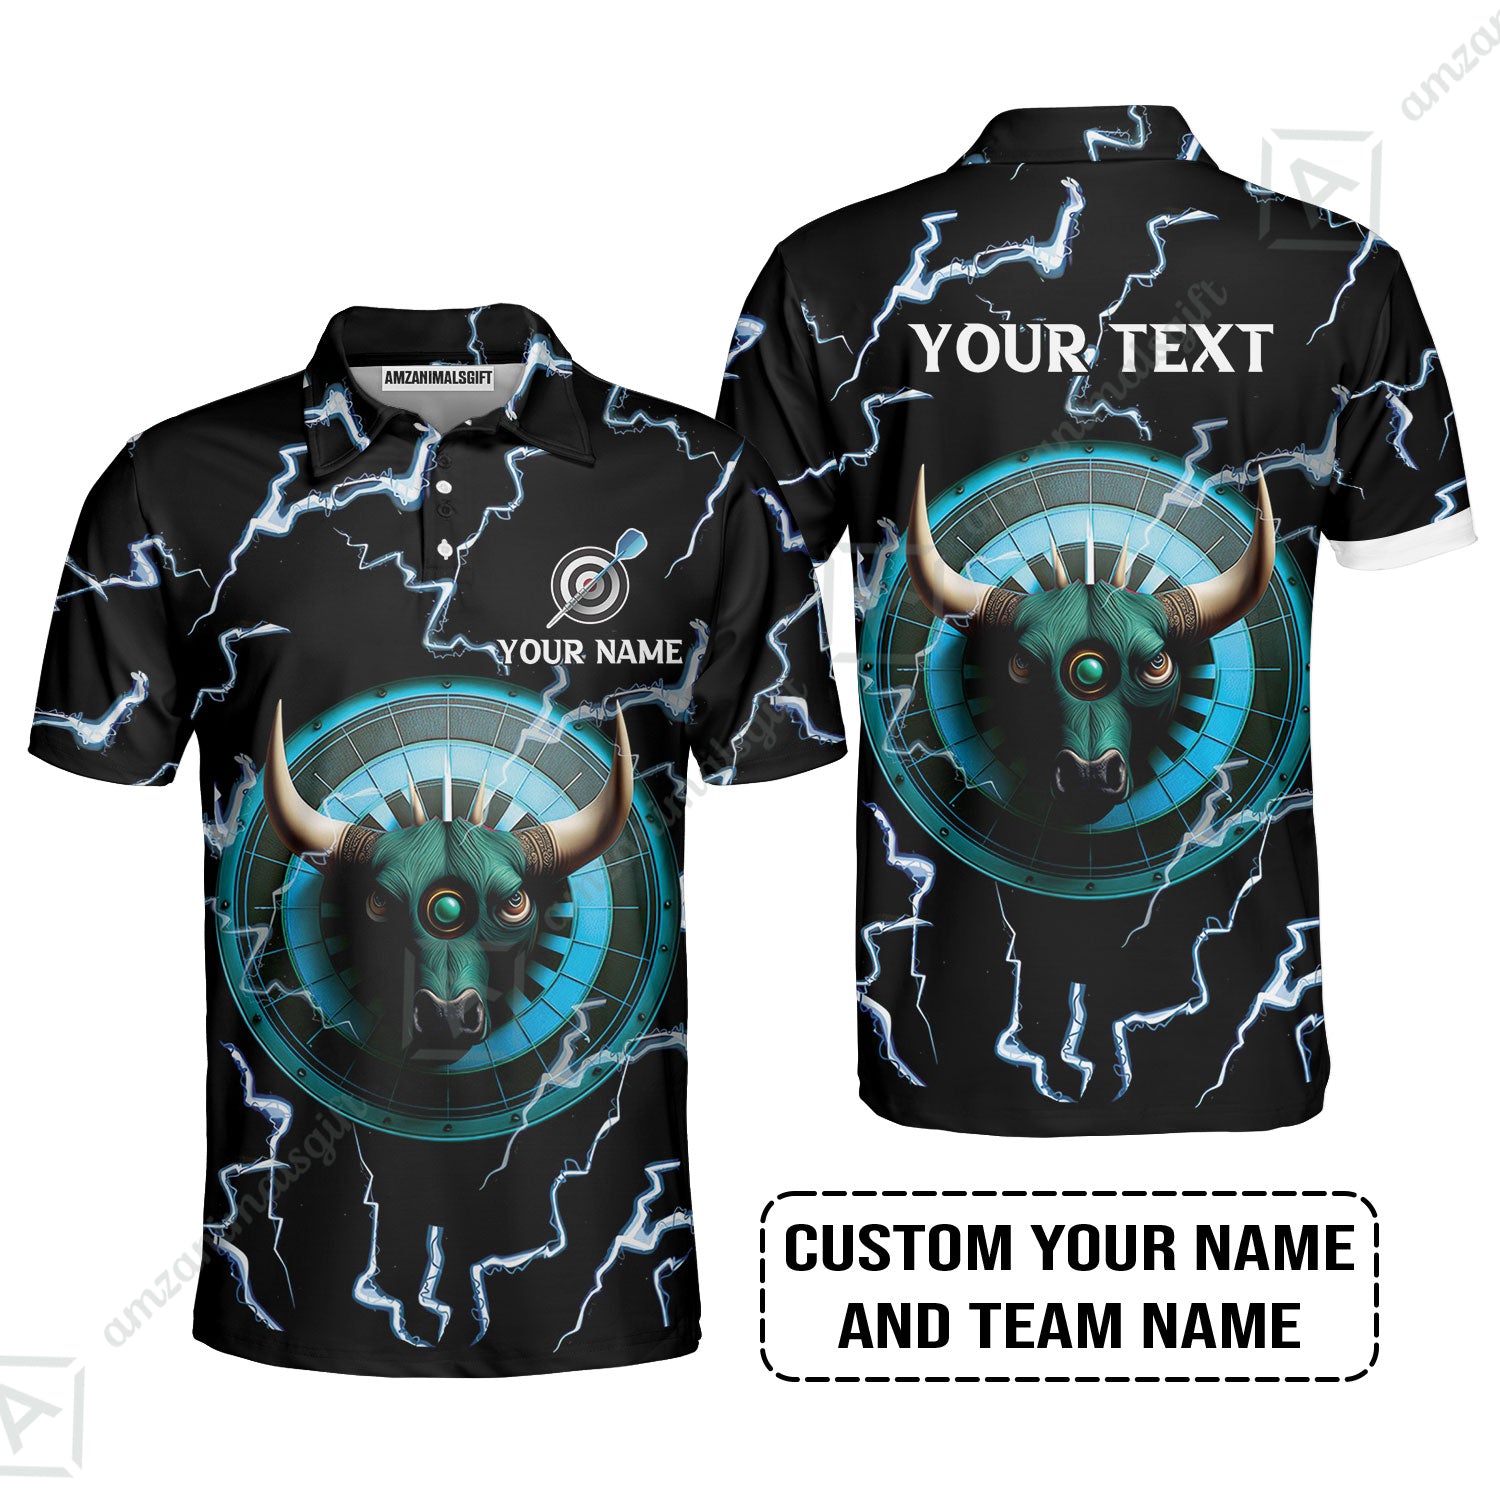 Customized Name & Text Darts Polo Shirt, Personalized Name Bullseye Dartboard Polo Shirt